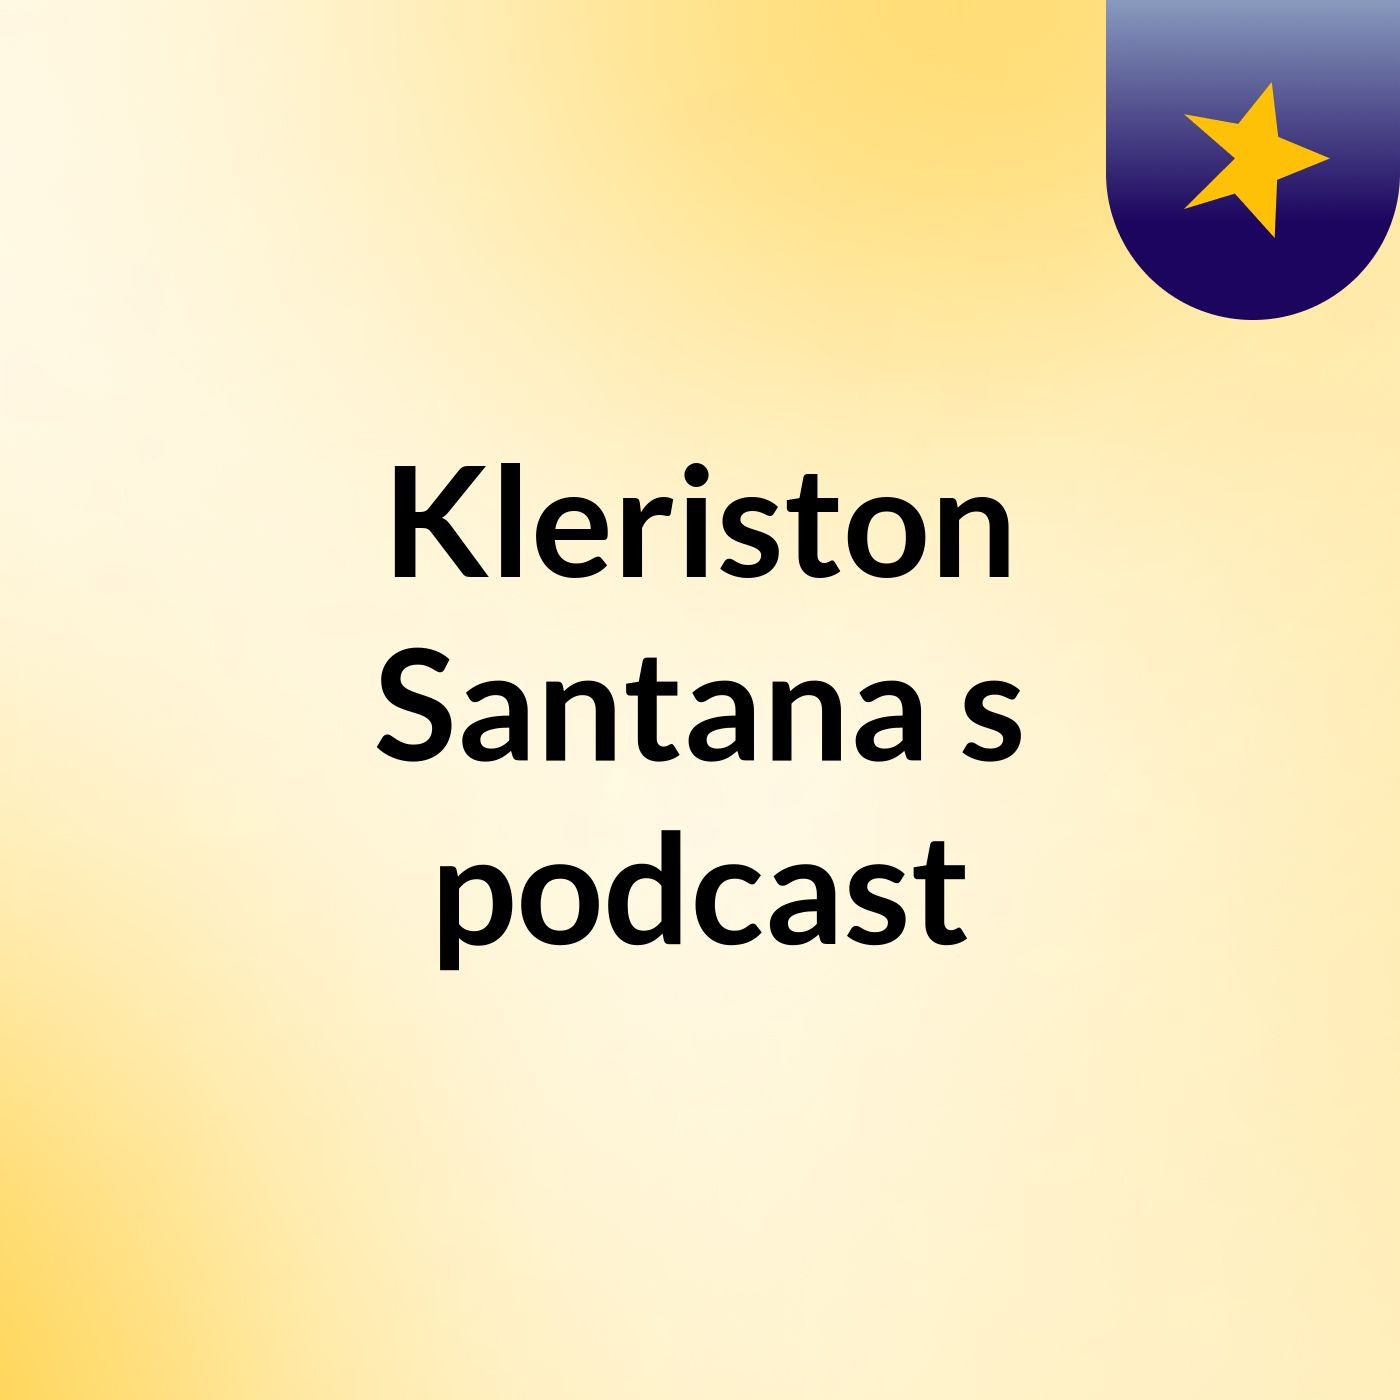 Kleriston Santana's podcast